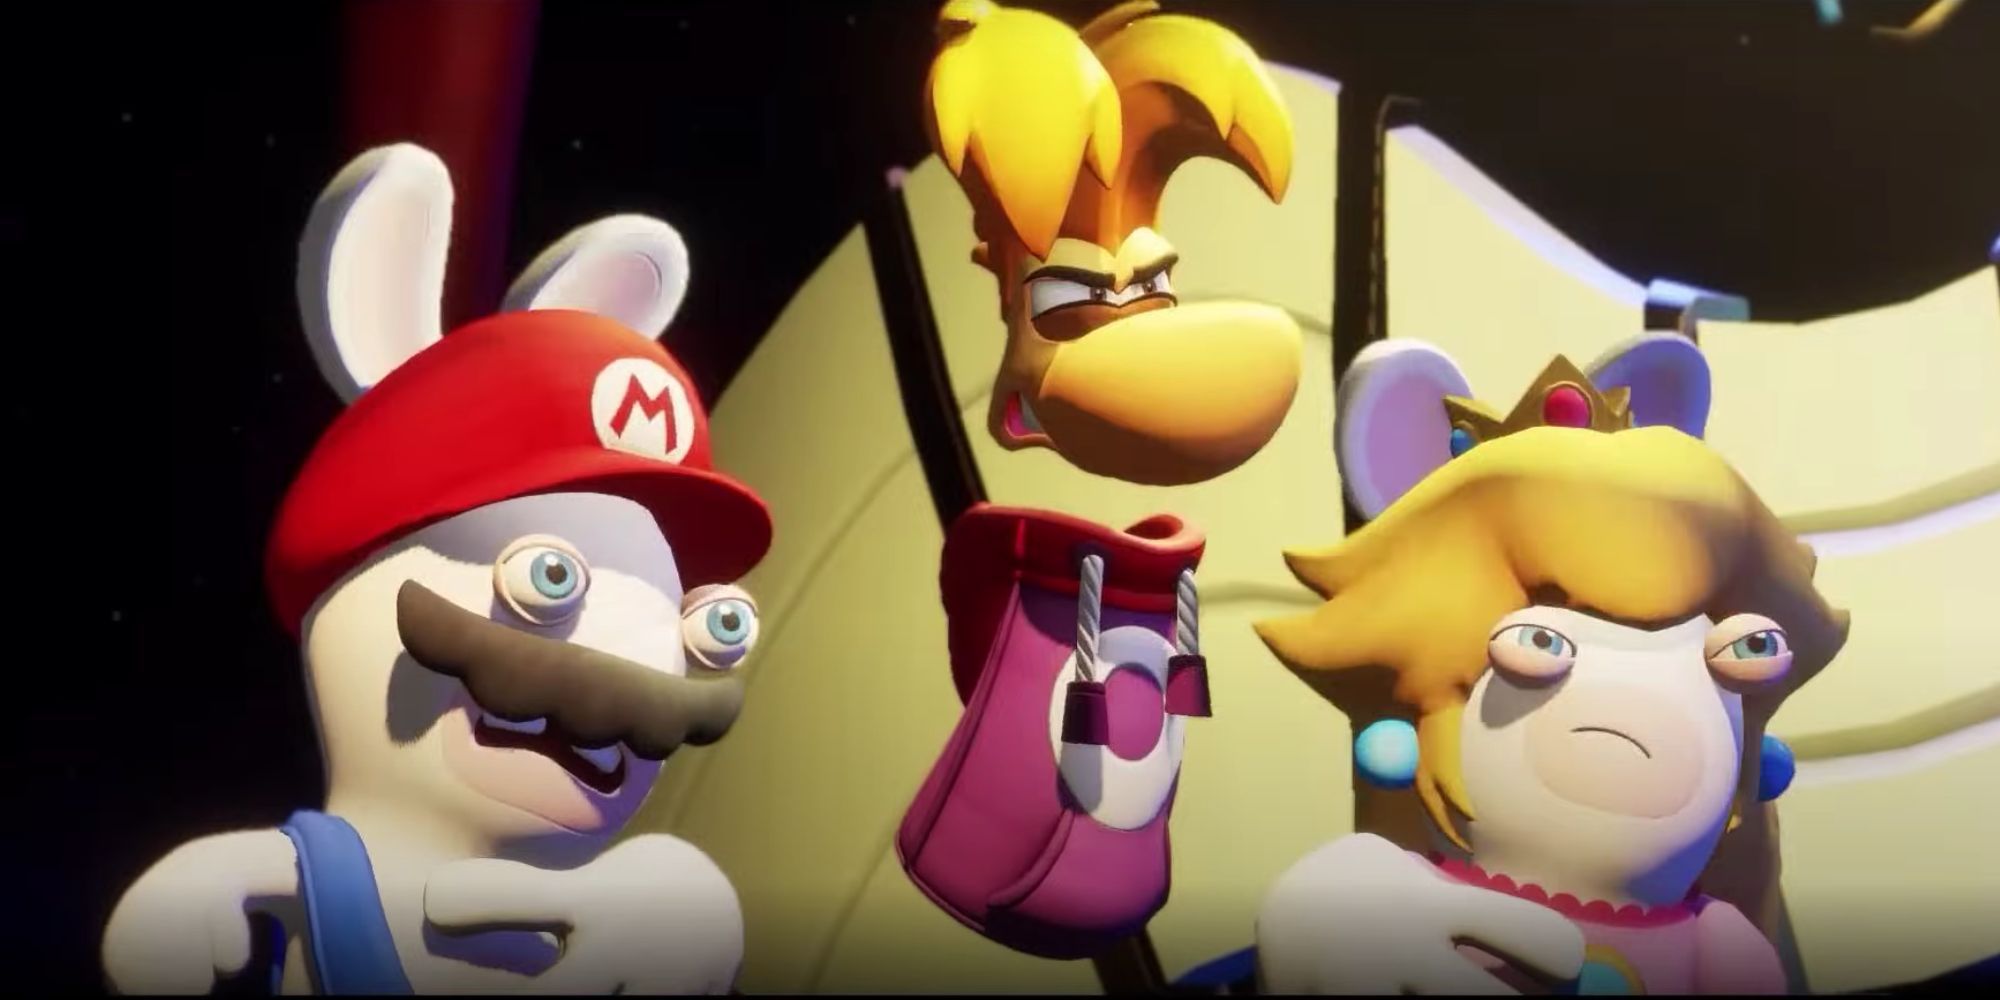 Rayman with Rabbid Mario and Rabbid Peach.